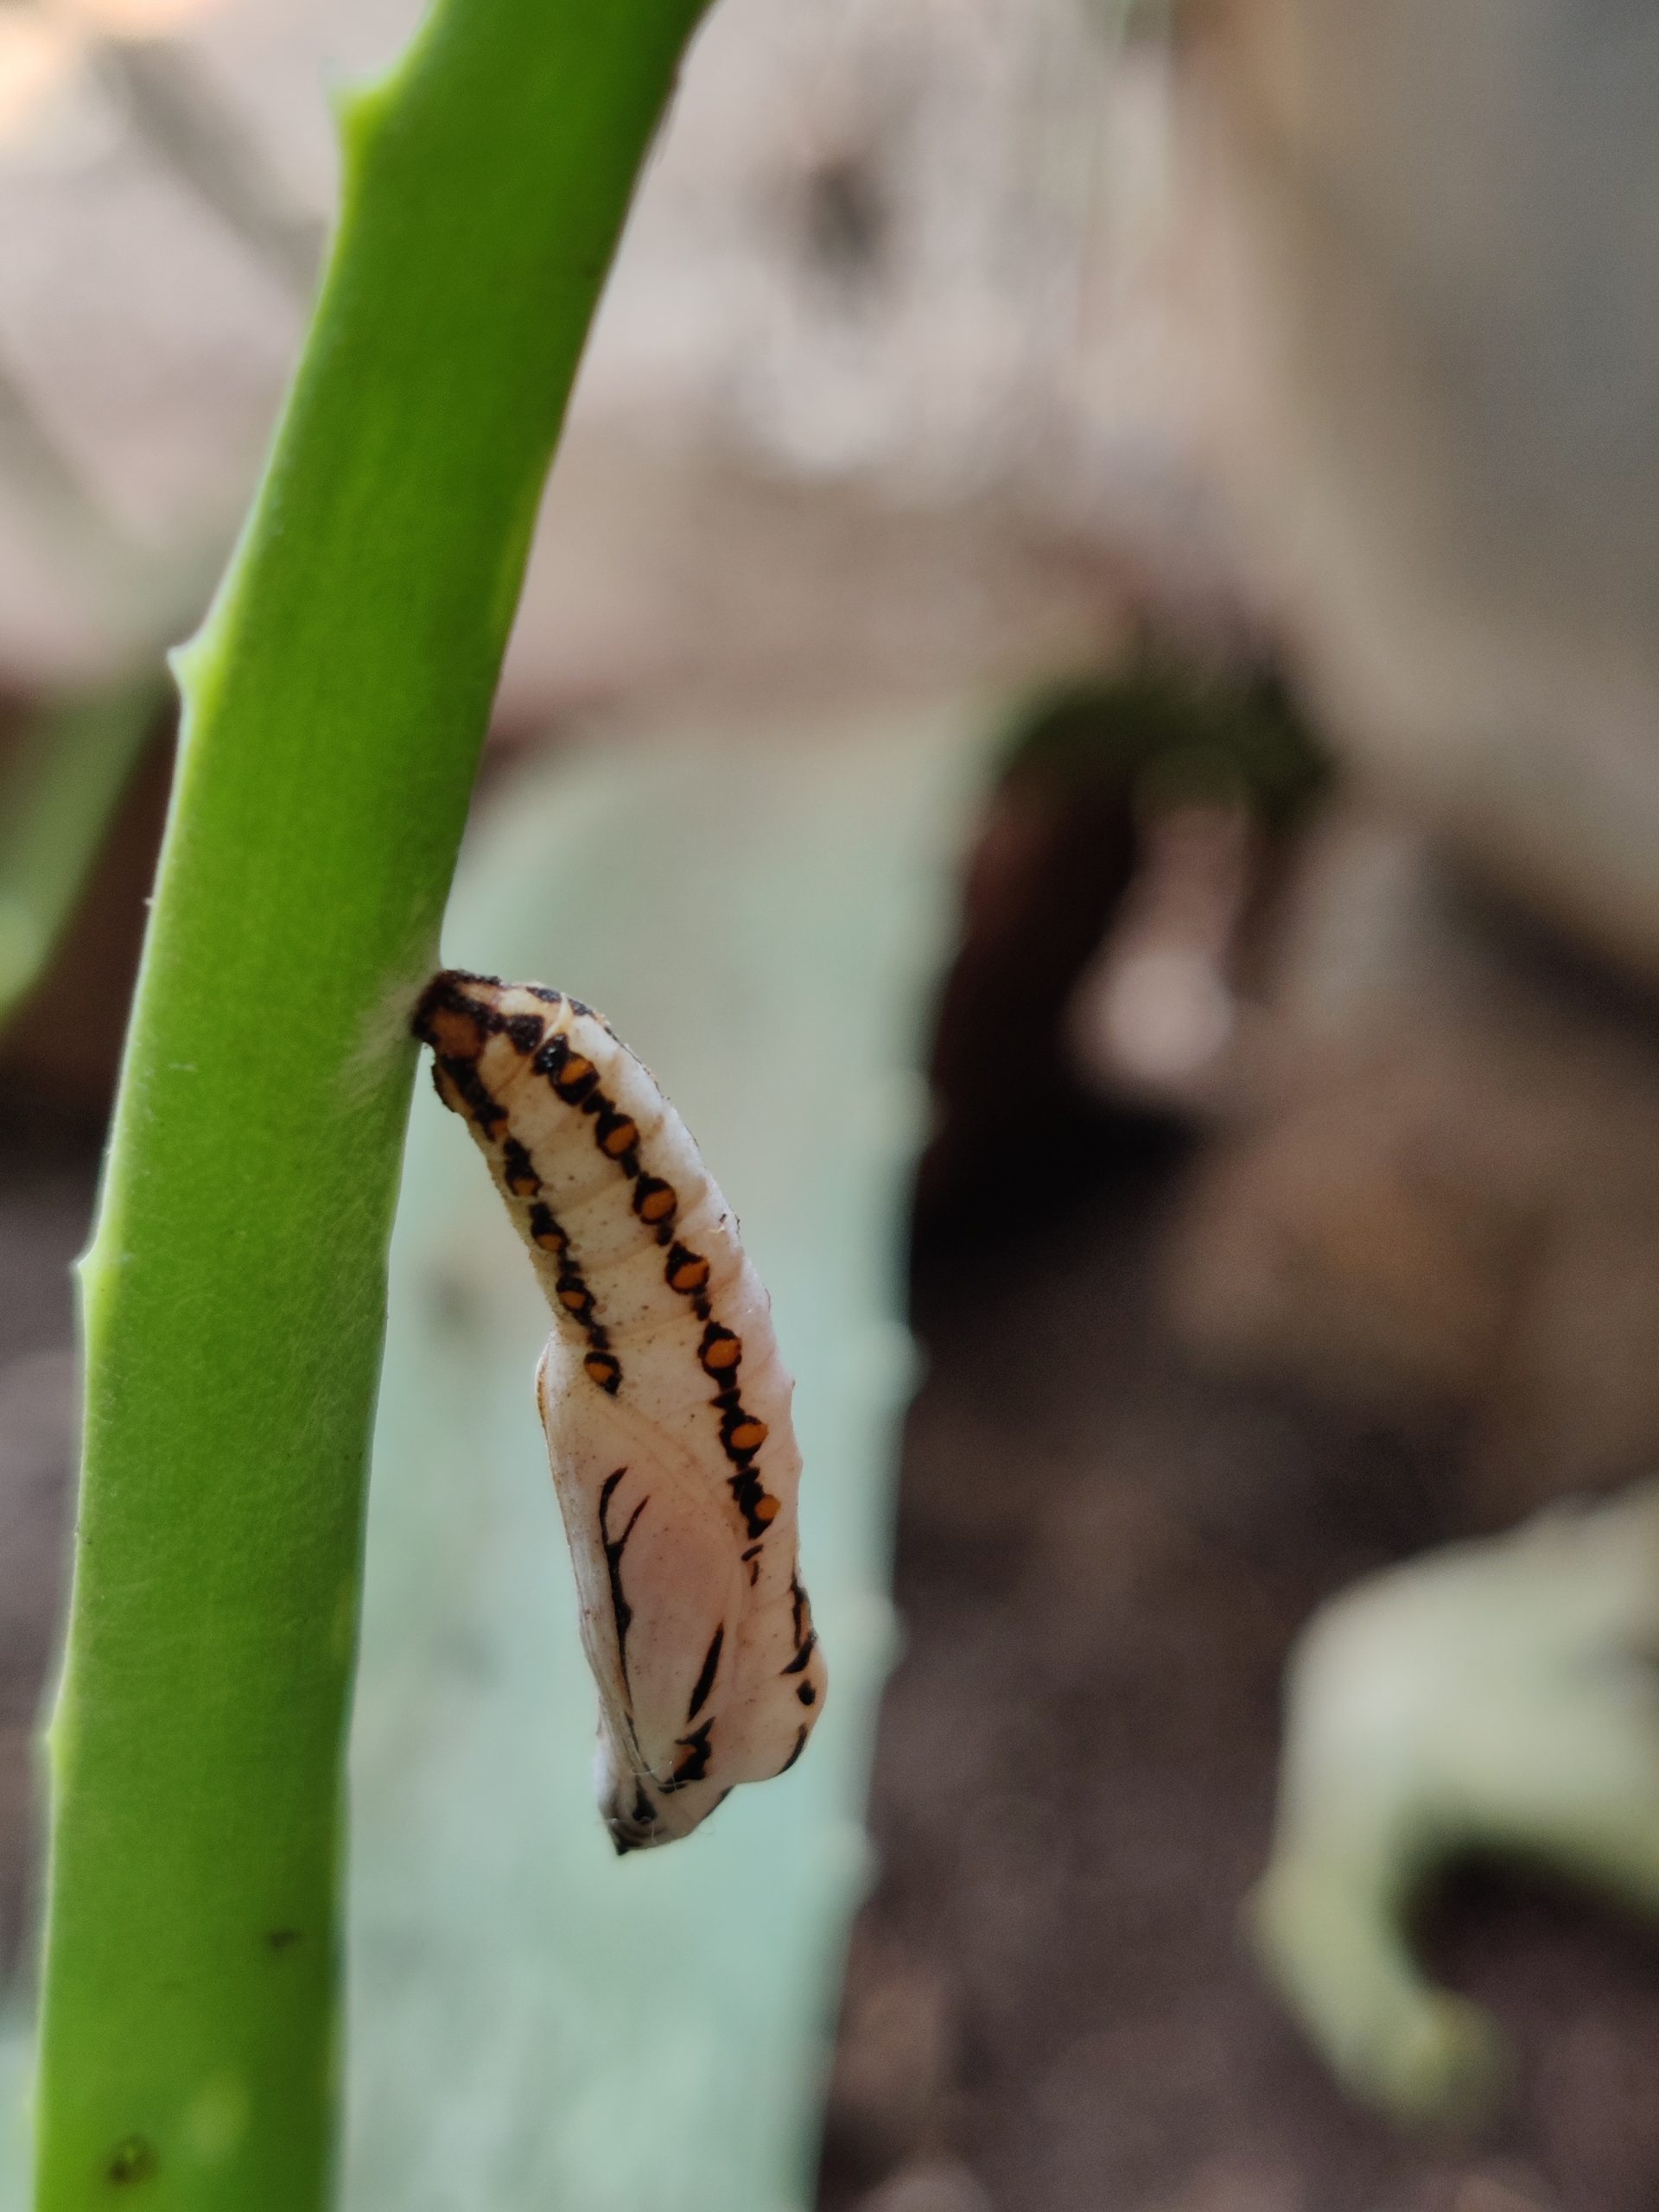 Butterfly larva on plant stem